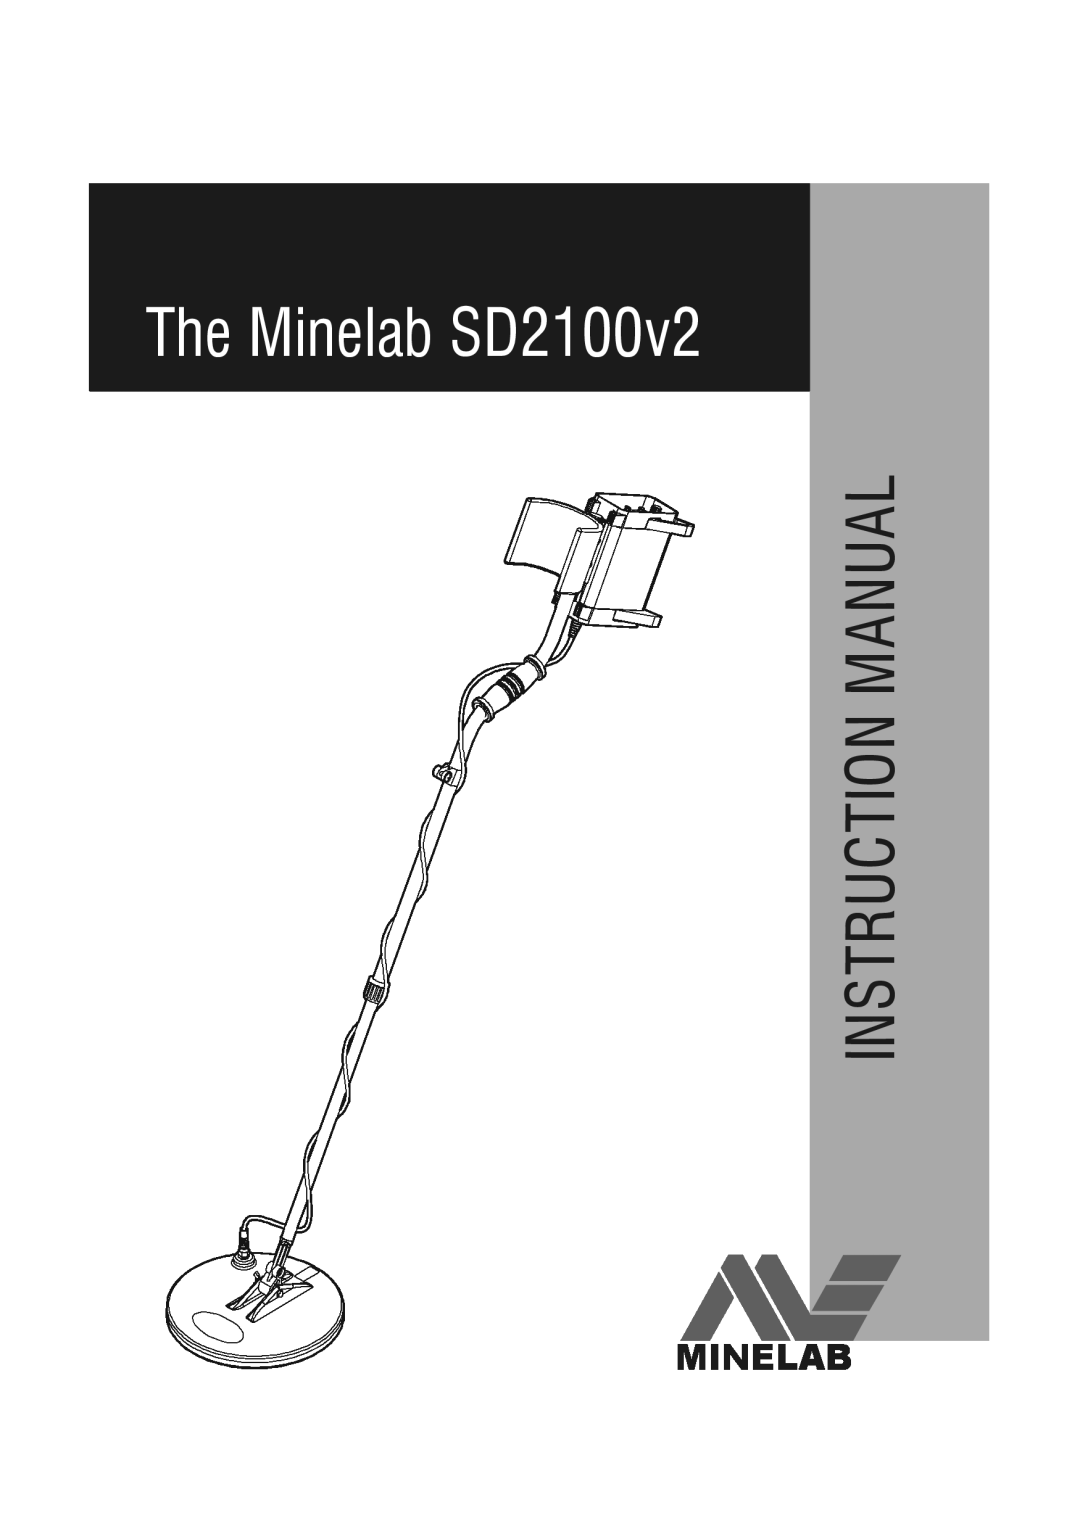 Minelab instruction manual The Minelab SD2100v2, Instruction Manual 